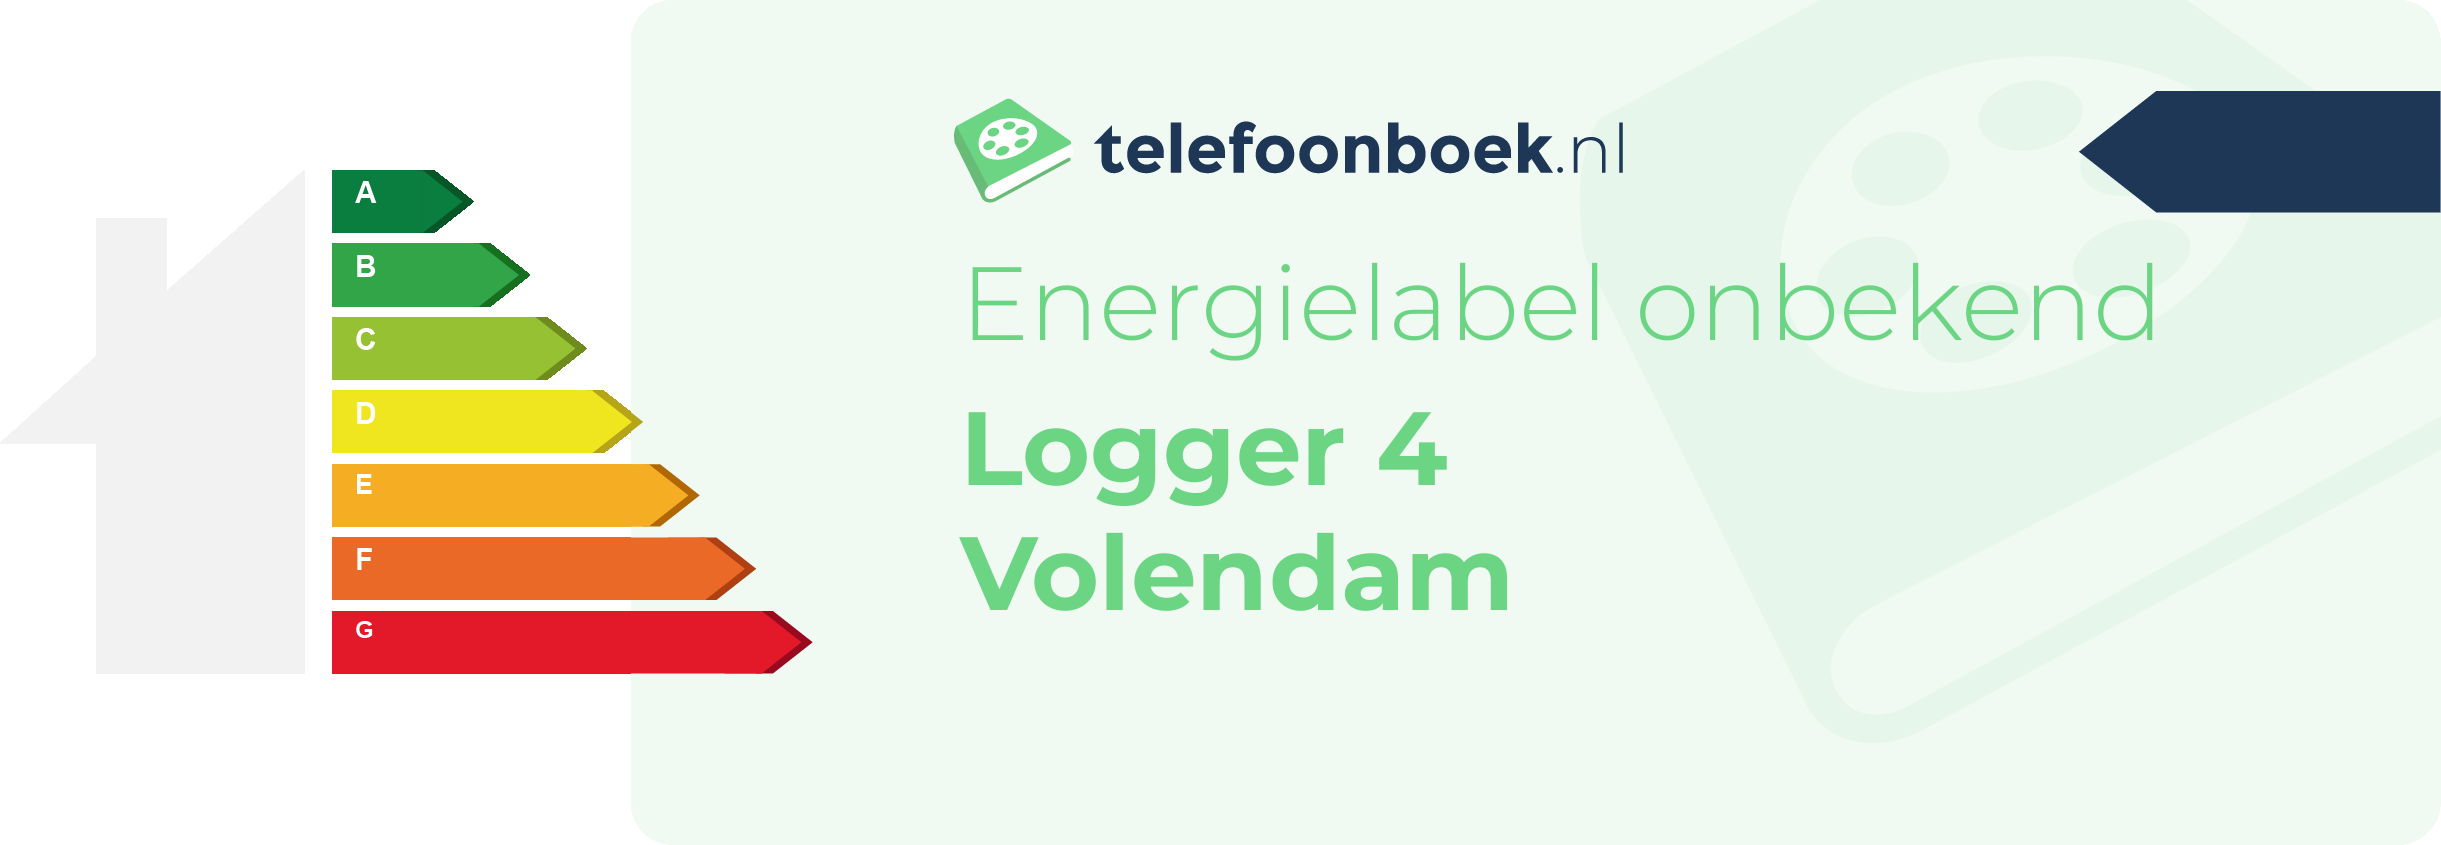 Energielabel Logger 4 Volendam